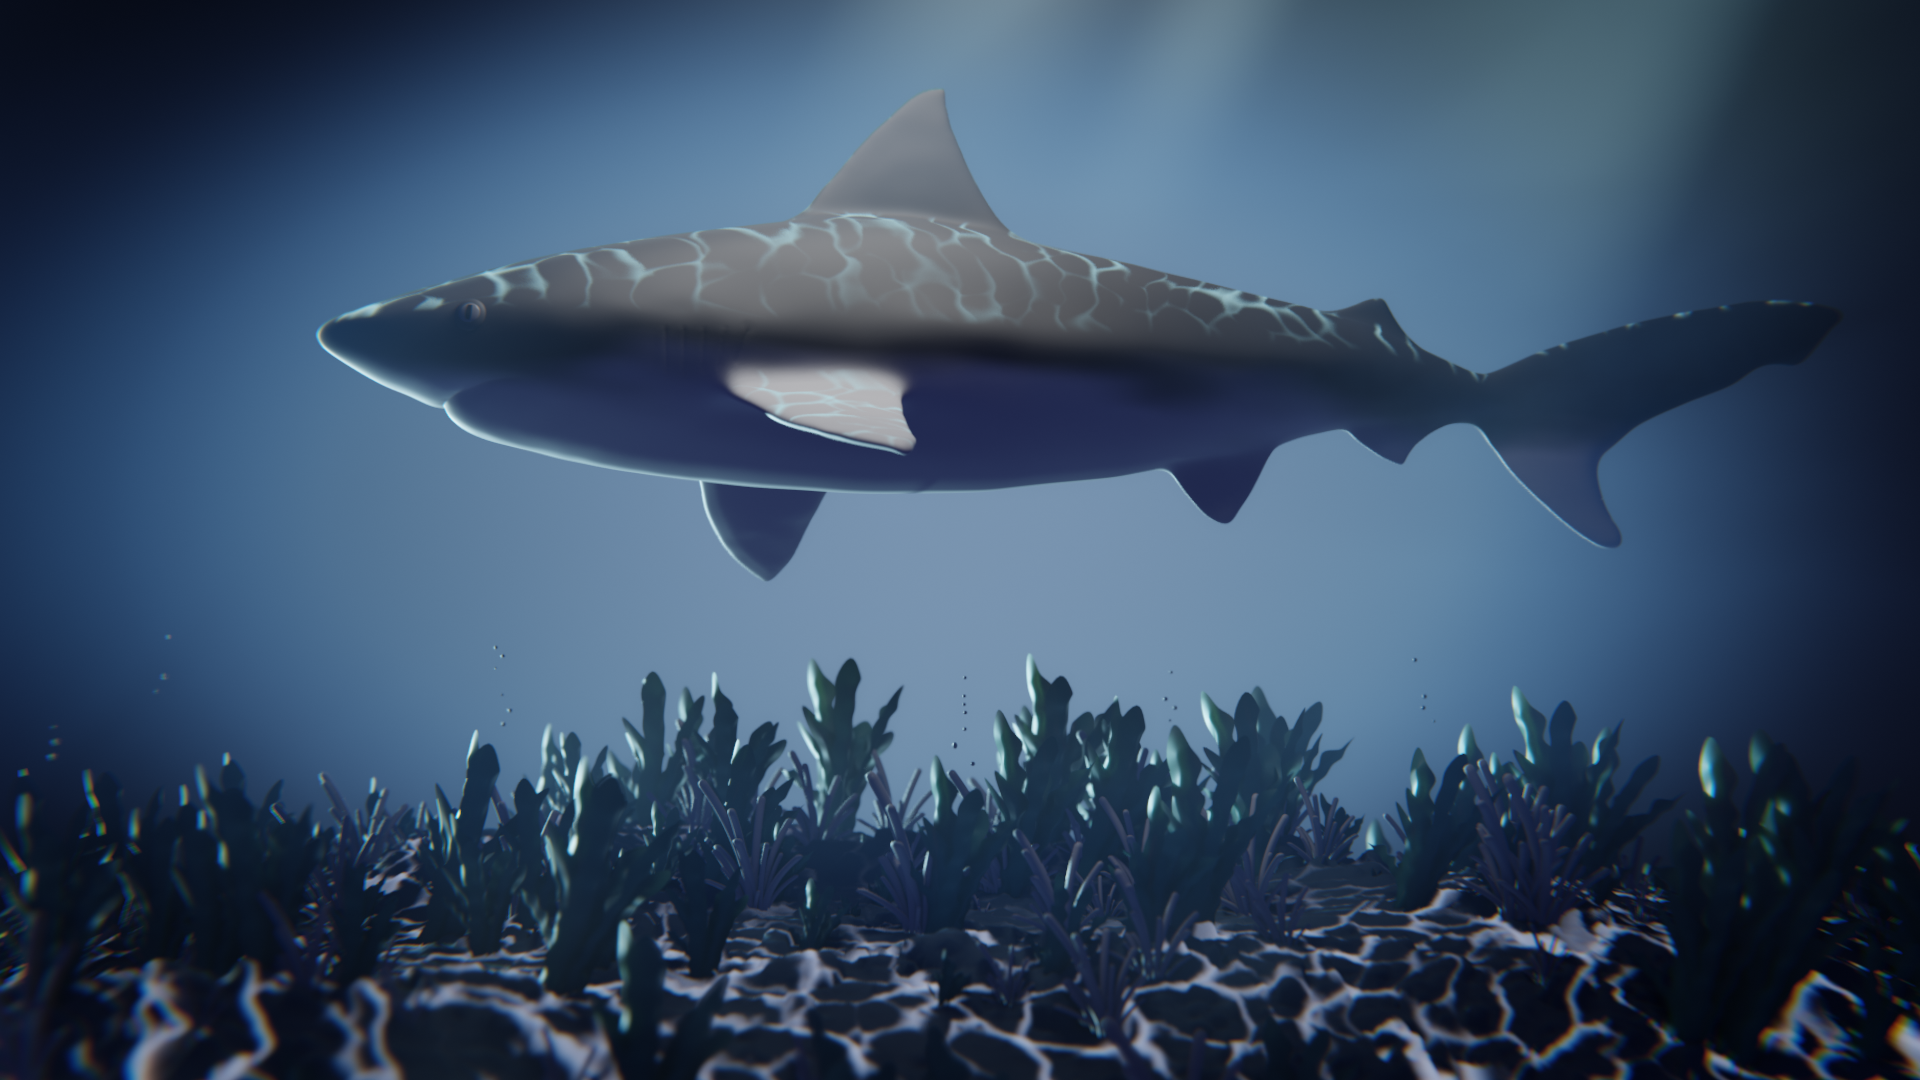 Shark - Finished Projects - Blender Artists Community